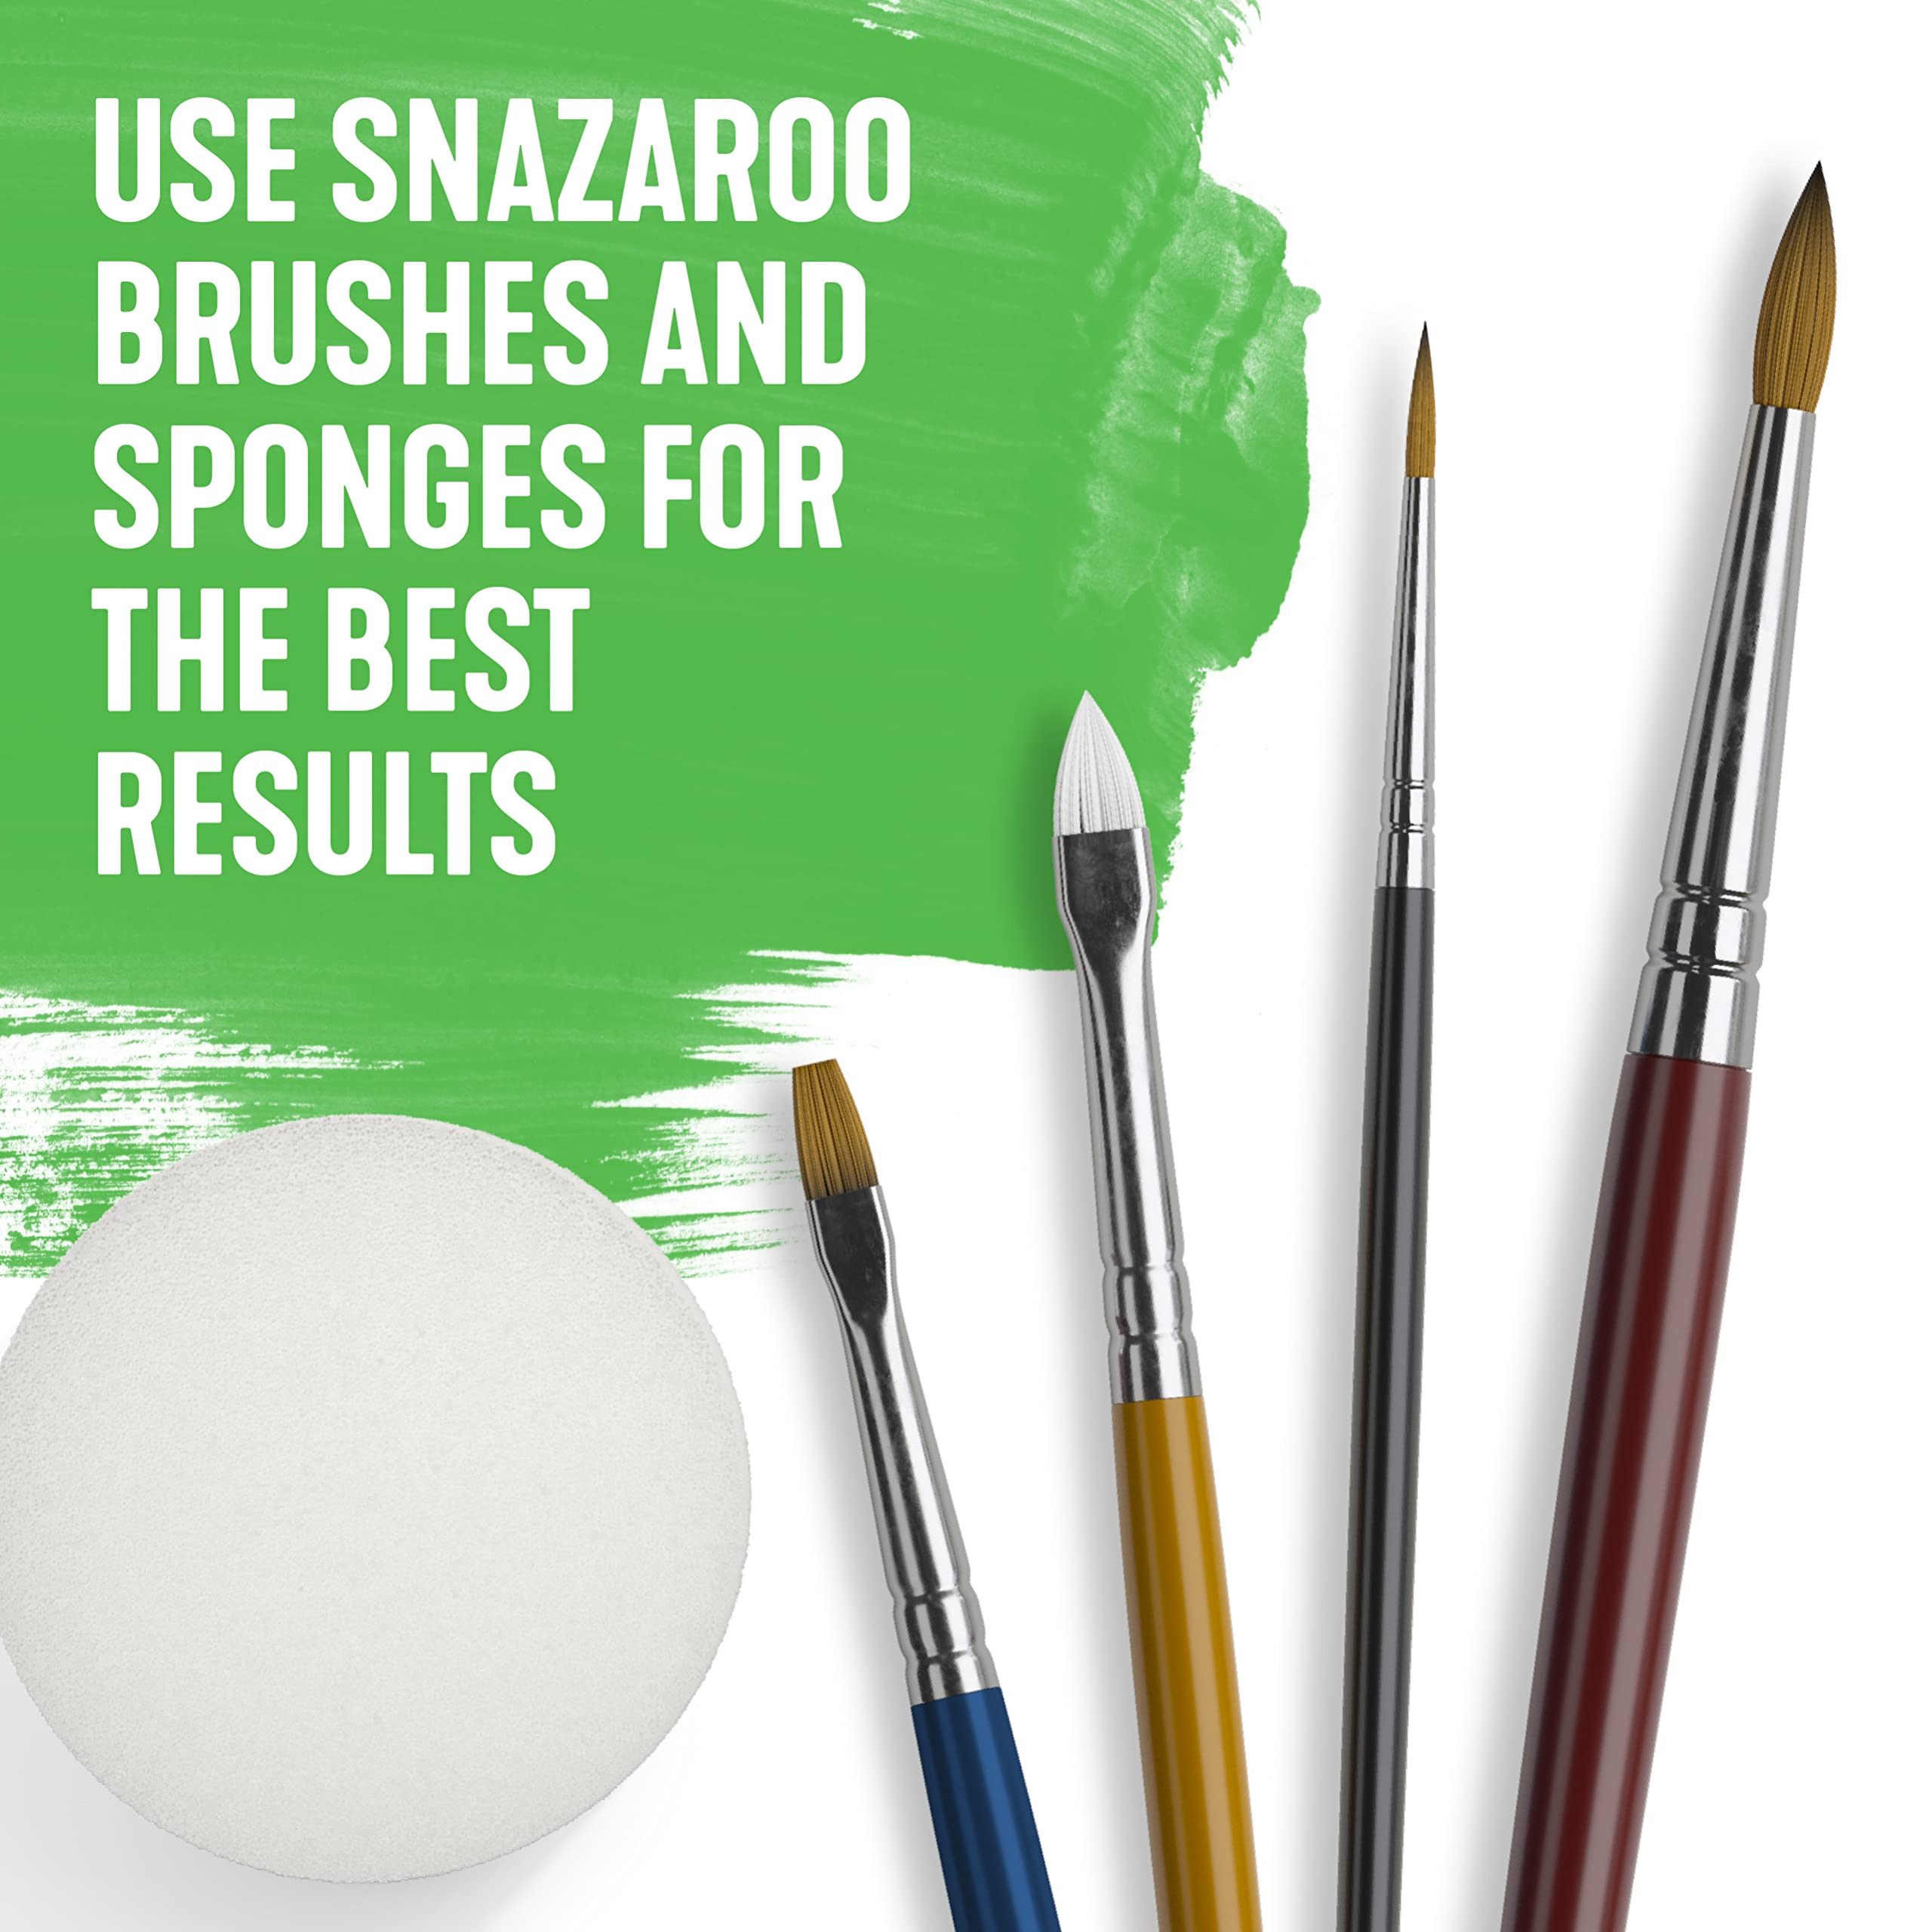 Snazaroo Classic Face and Body Paint, 18.8g (0.66-oz) Pot, Light Grey